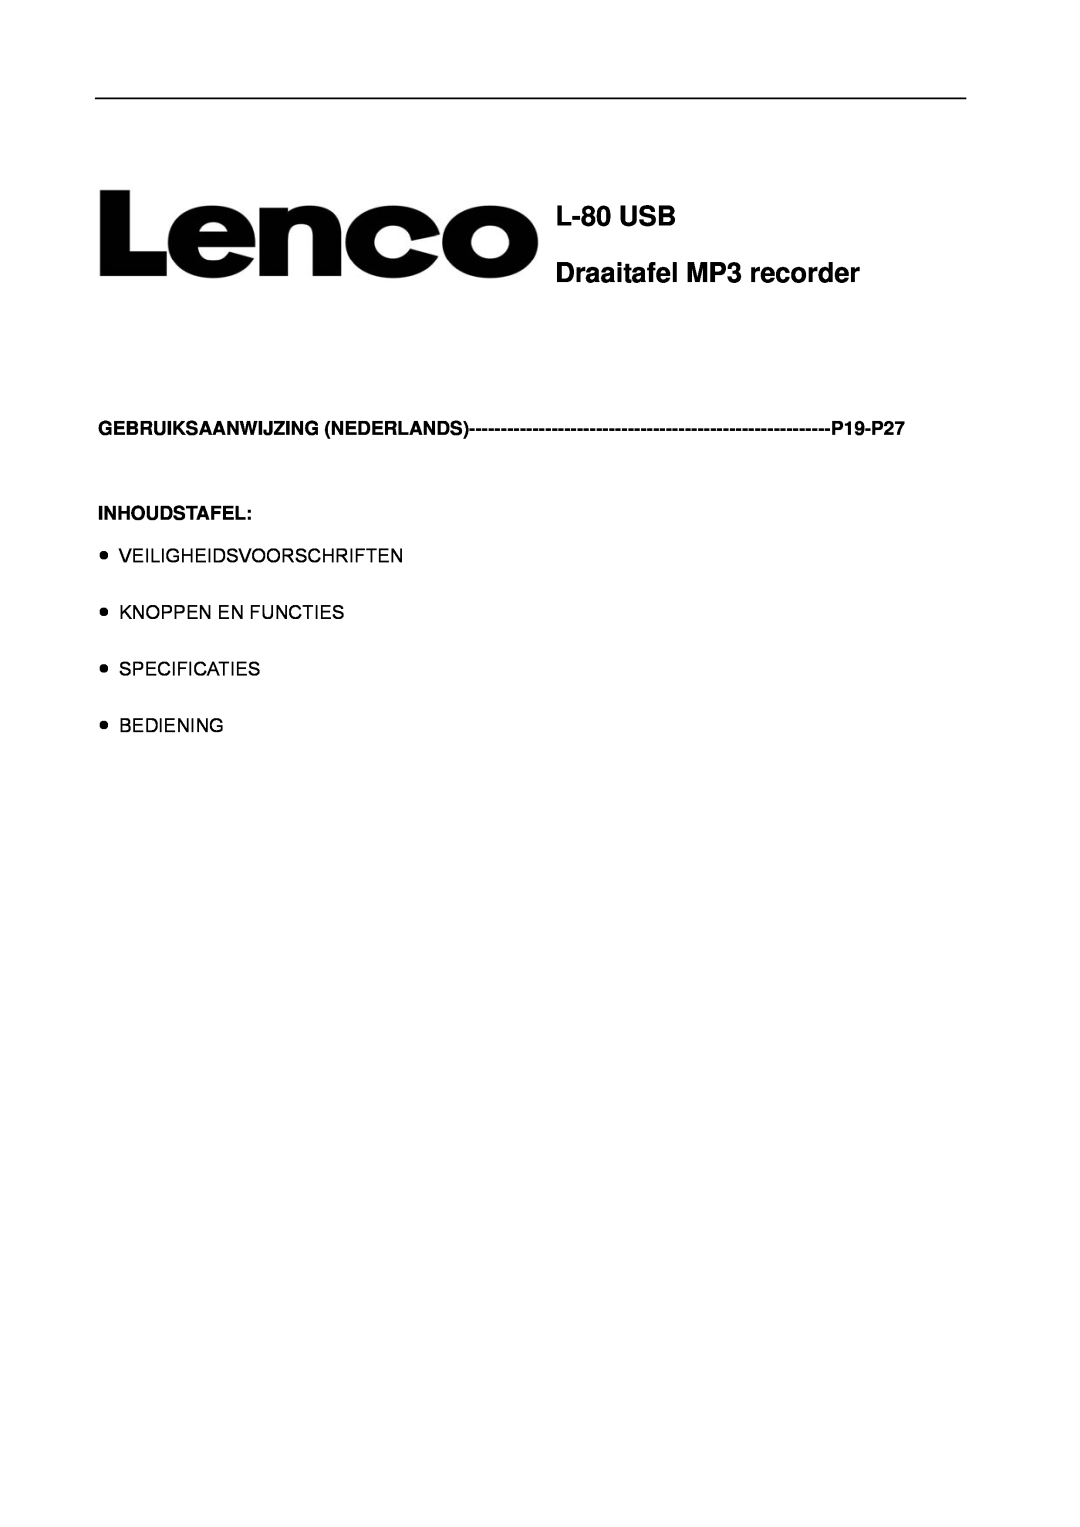 Lenco Marine L-80 USB user manual L-80USB Draaitafel MP3 recorder, P19-P27, Inhoudstafel, Gebruiksaanwijzing Nederlands 